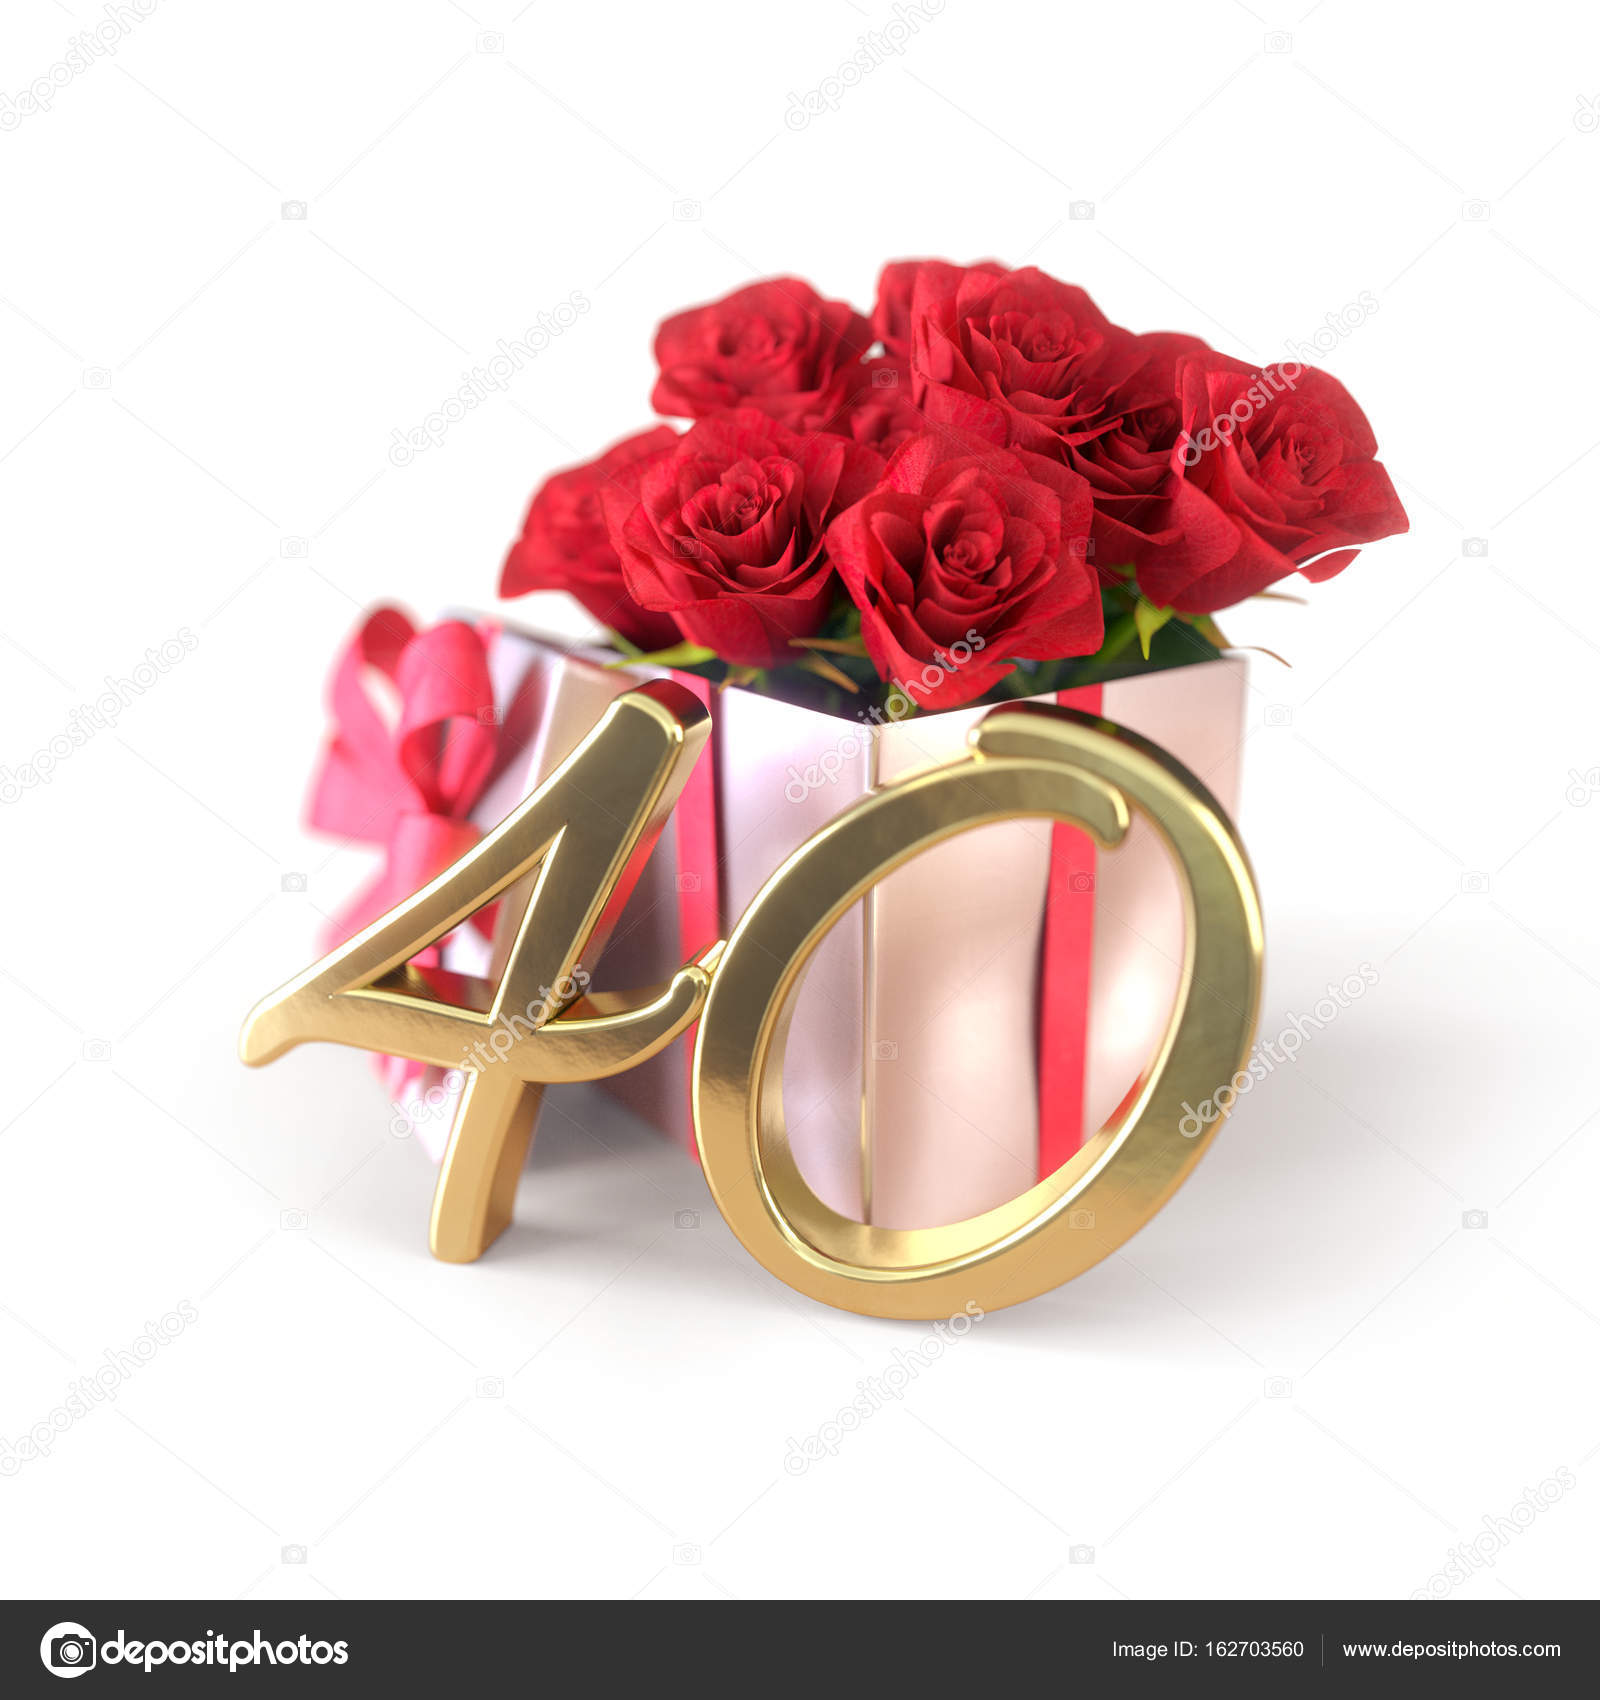 40 roses images libres de droit, photos de 40 roses | Depositphotos